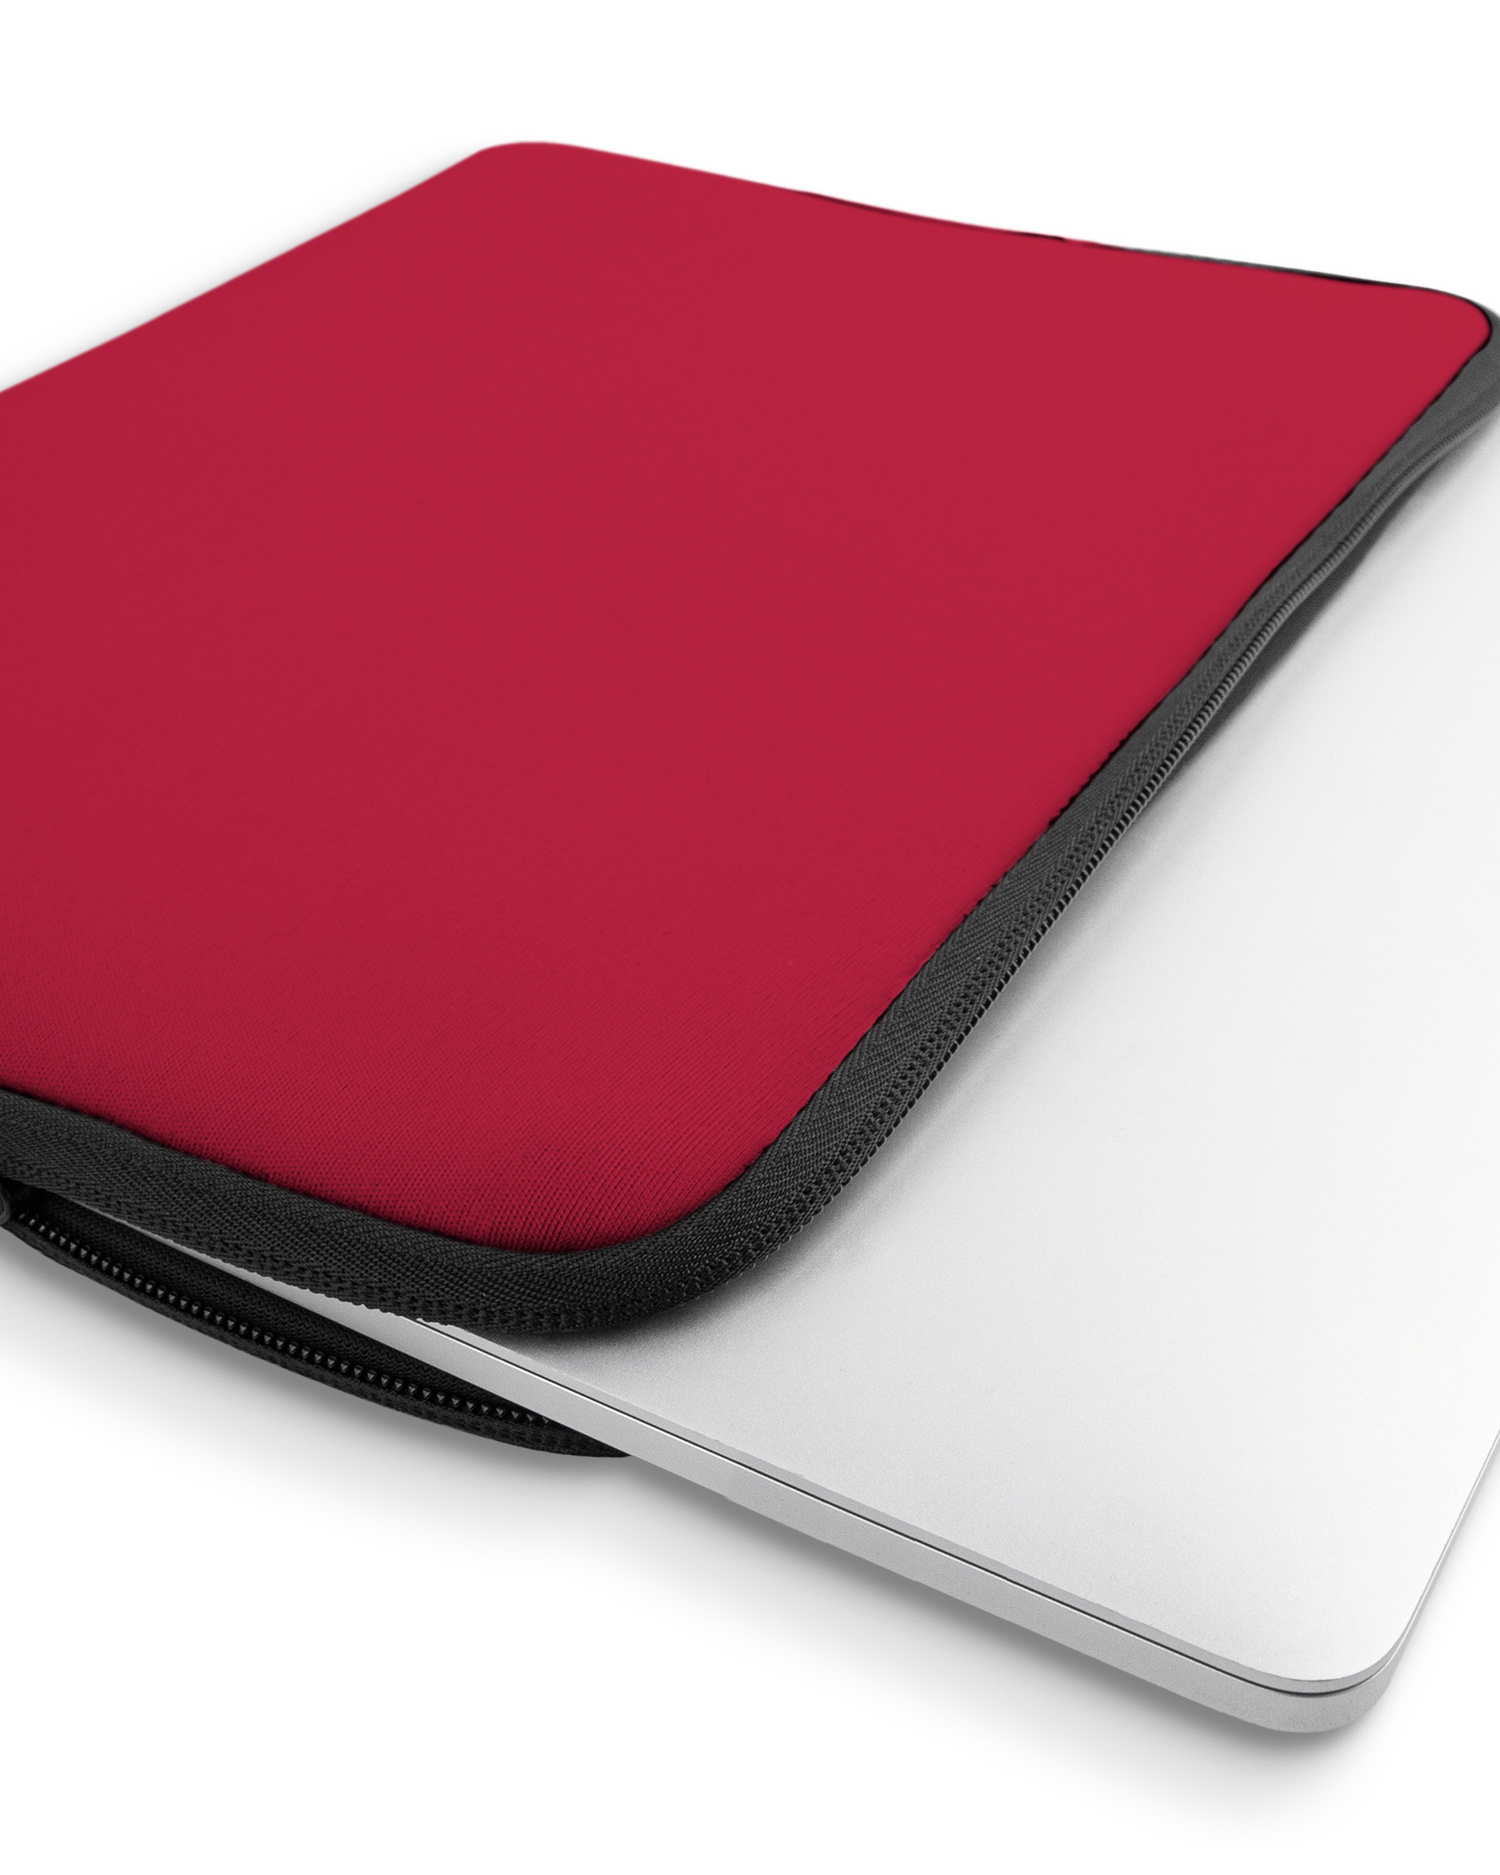 RED Laptophülle 16 Zoll mit Gerät im Inneren